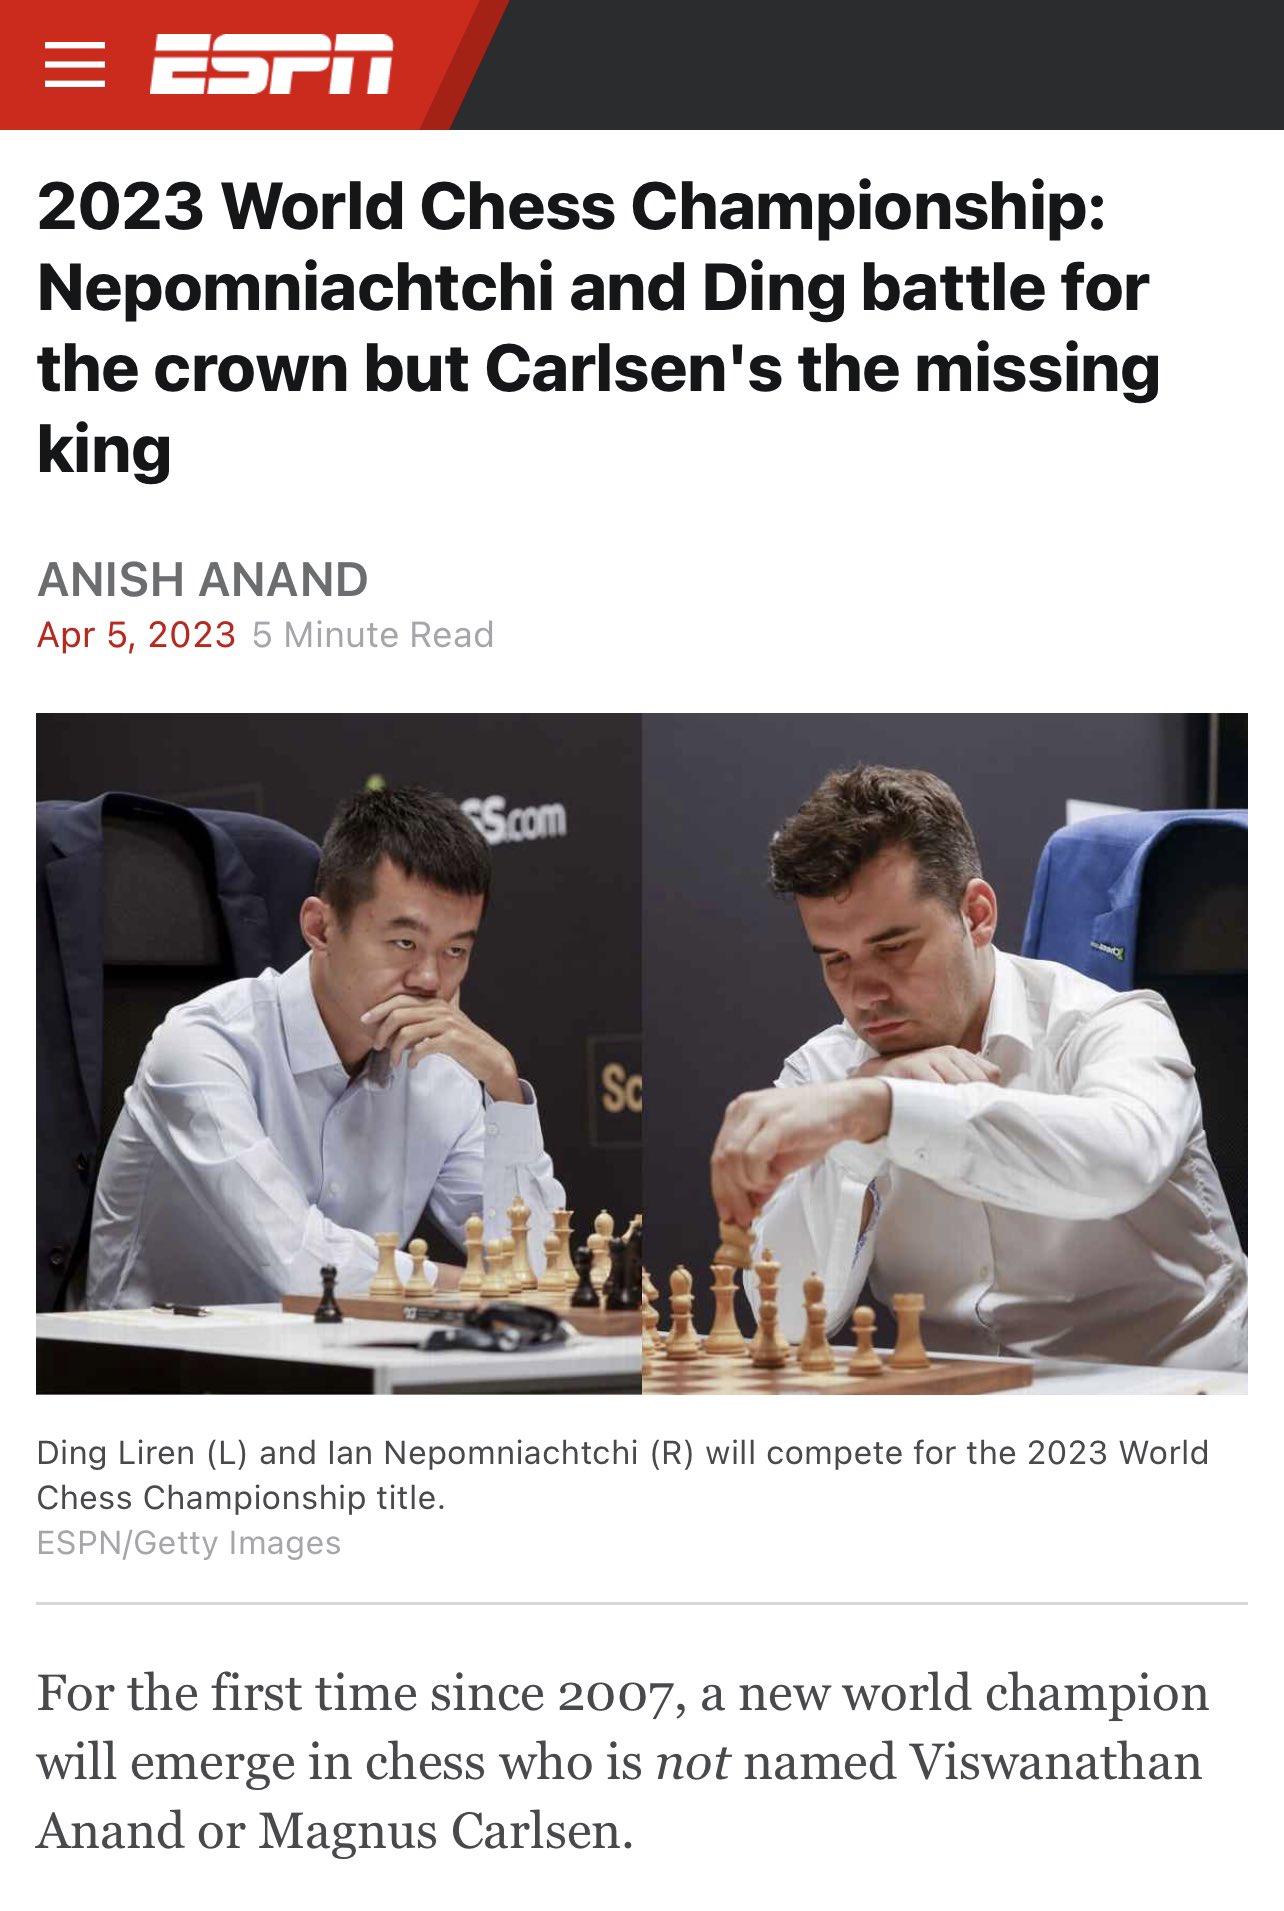 Magnus Carlsen: “I am him.” : r/chess